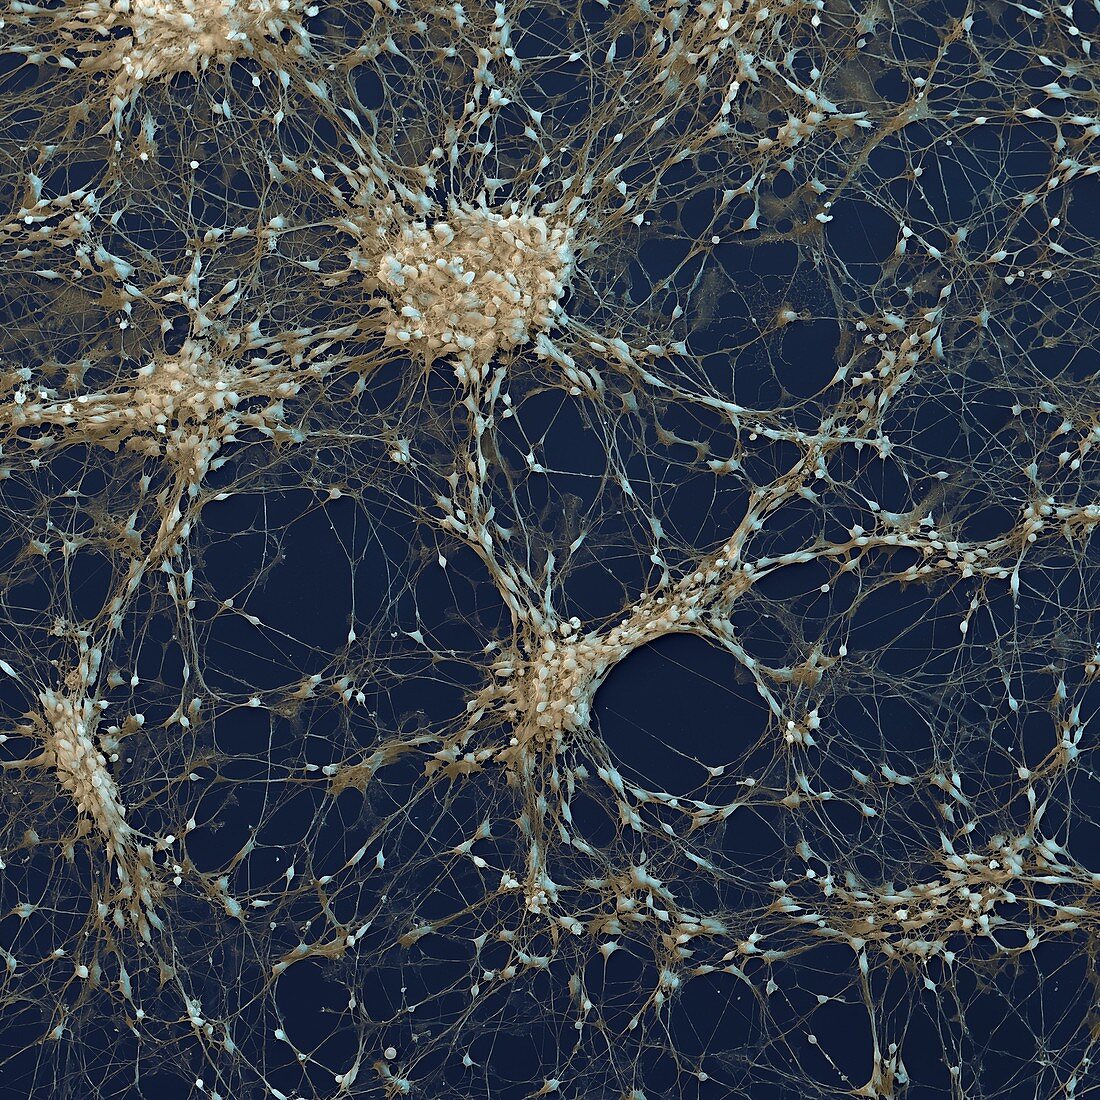 Neural progenitor cells, SEM